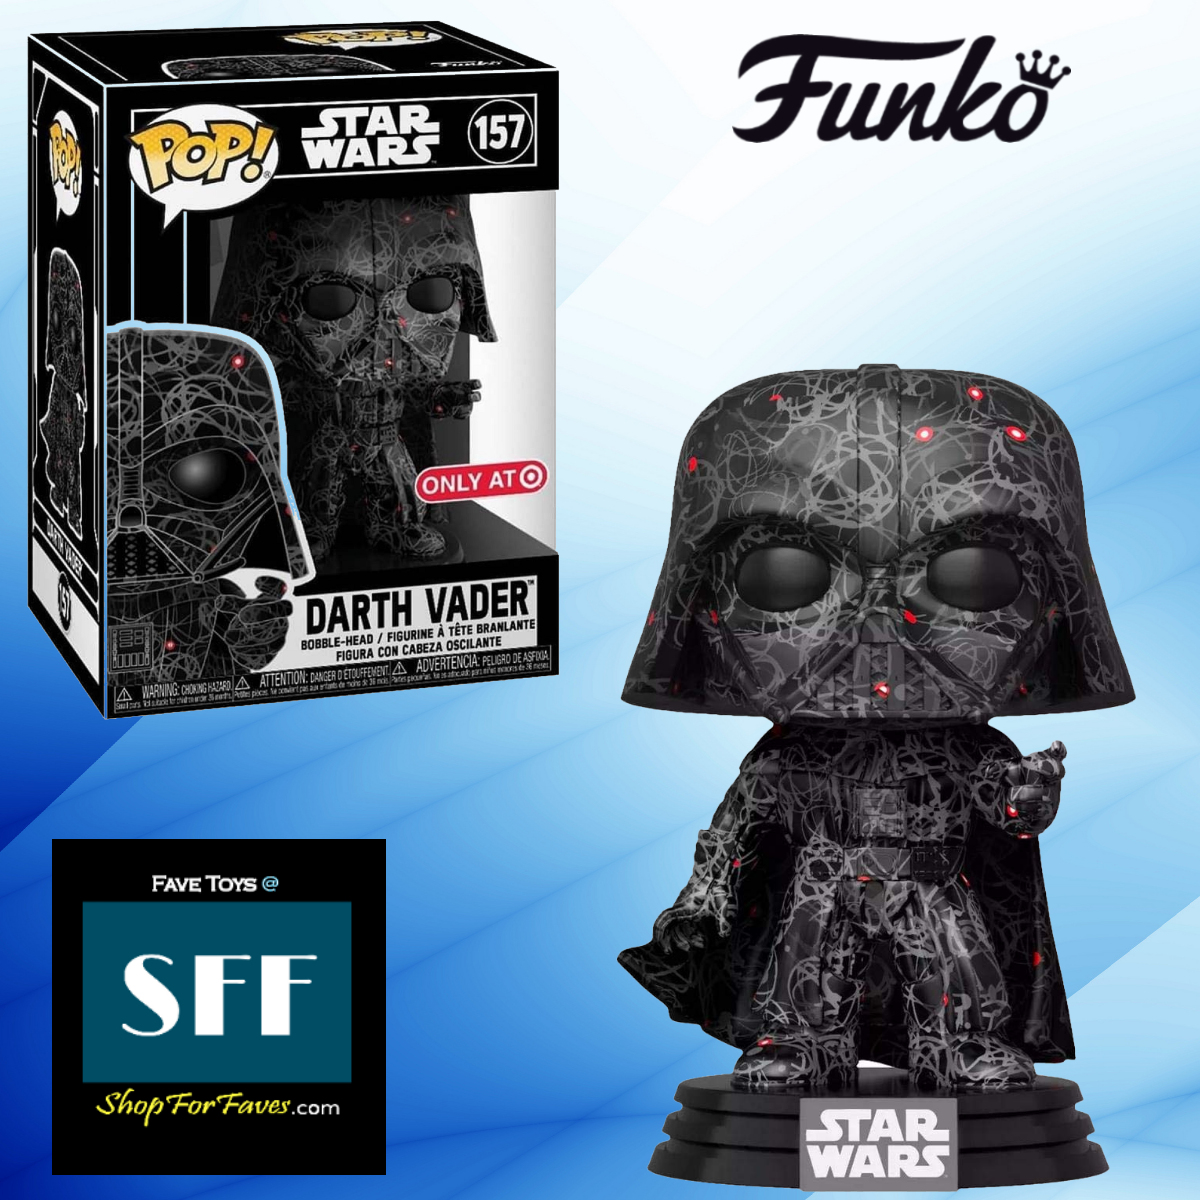 NEW Star Wars Funko Pop! Target Excl w/ Stack Futura Darth Vader #157 